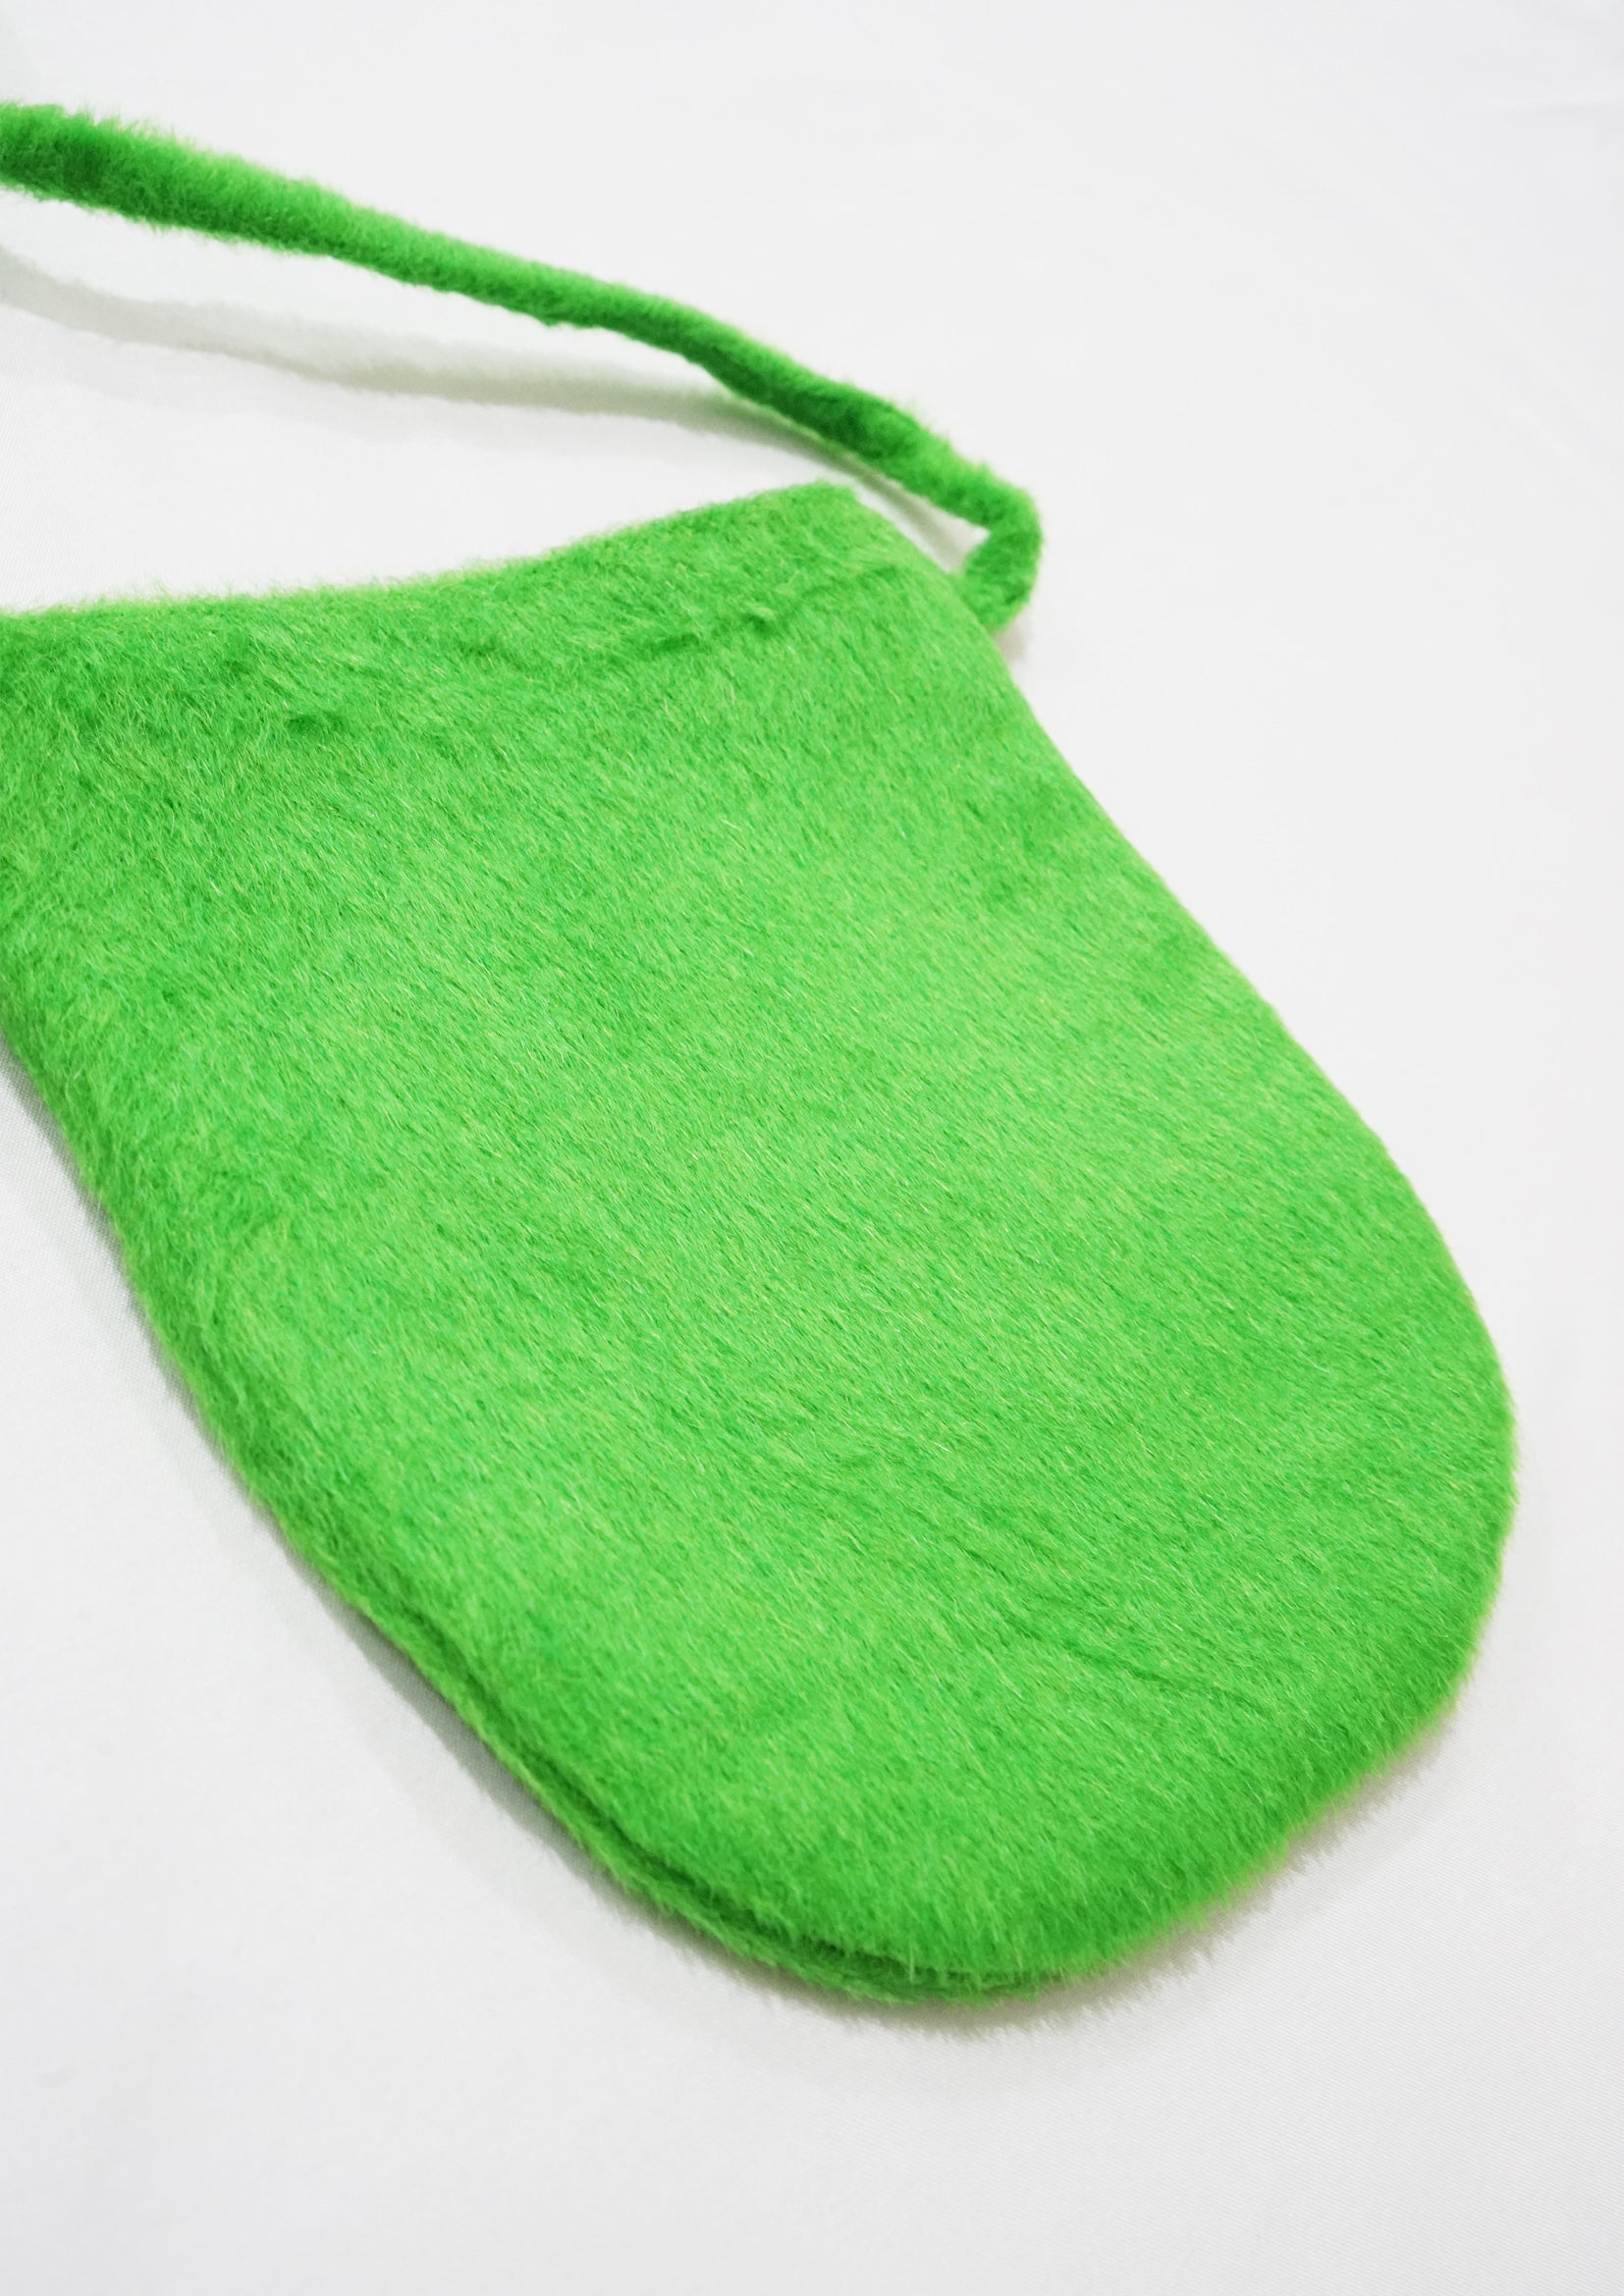 Wool crossbody bag in bright green